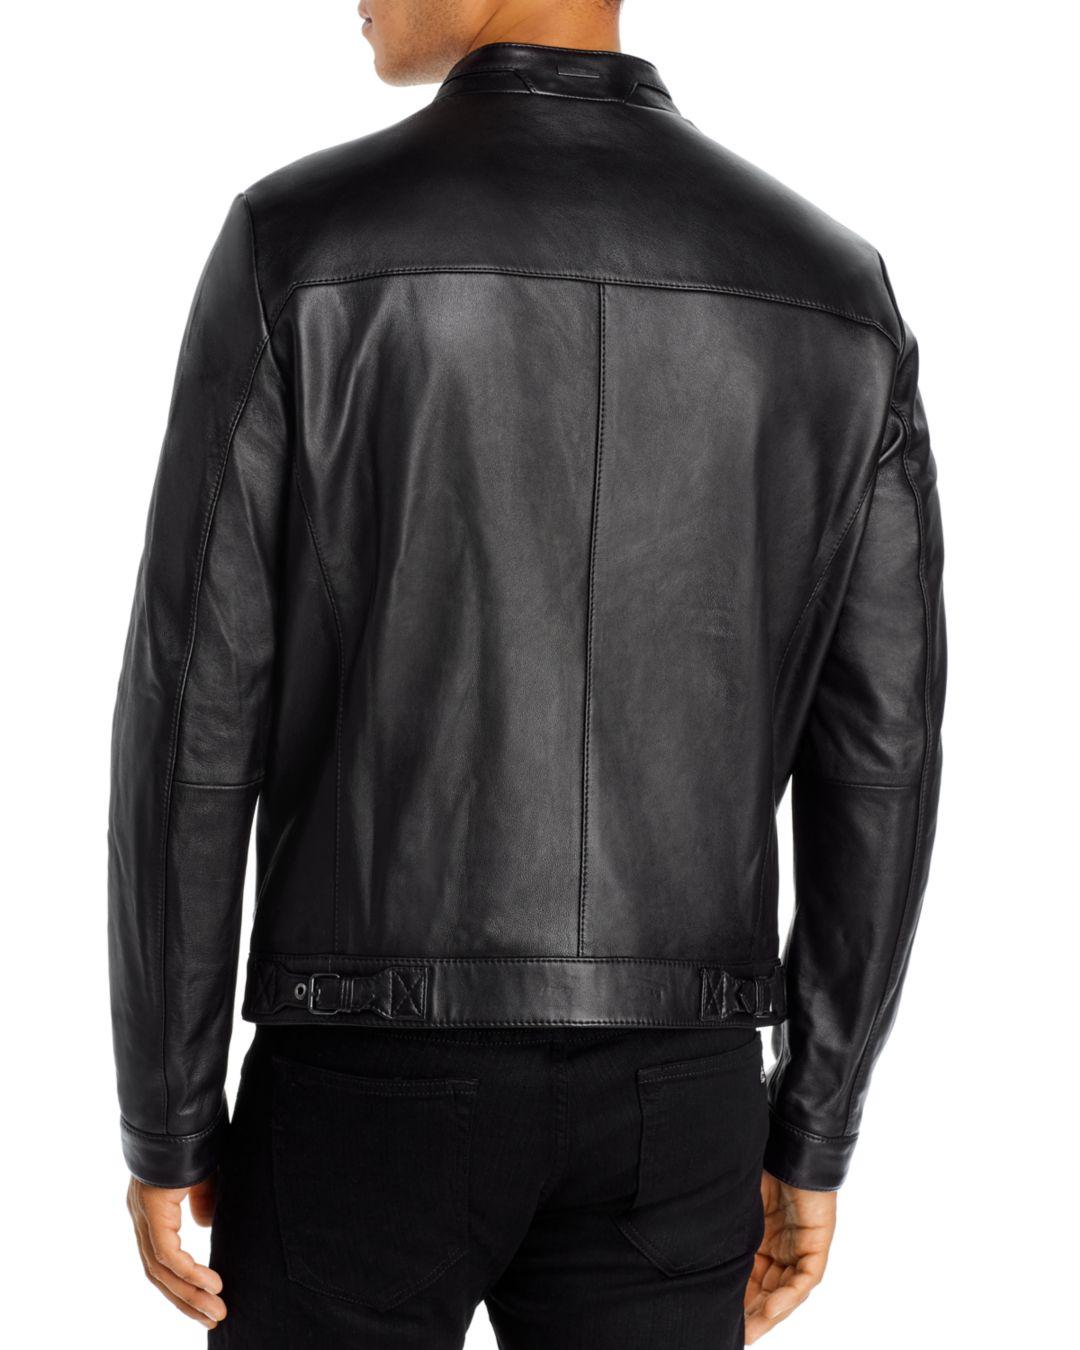 BOSS by Hugo Boss Nardi Leather Jacket in Black for Men - Lyst